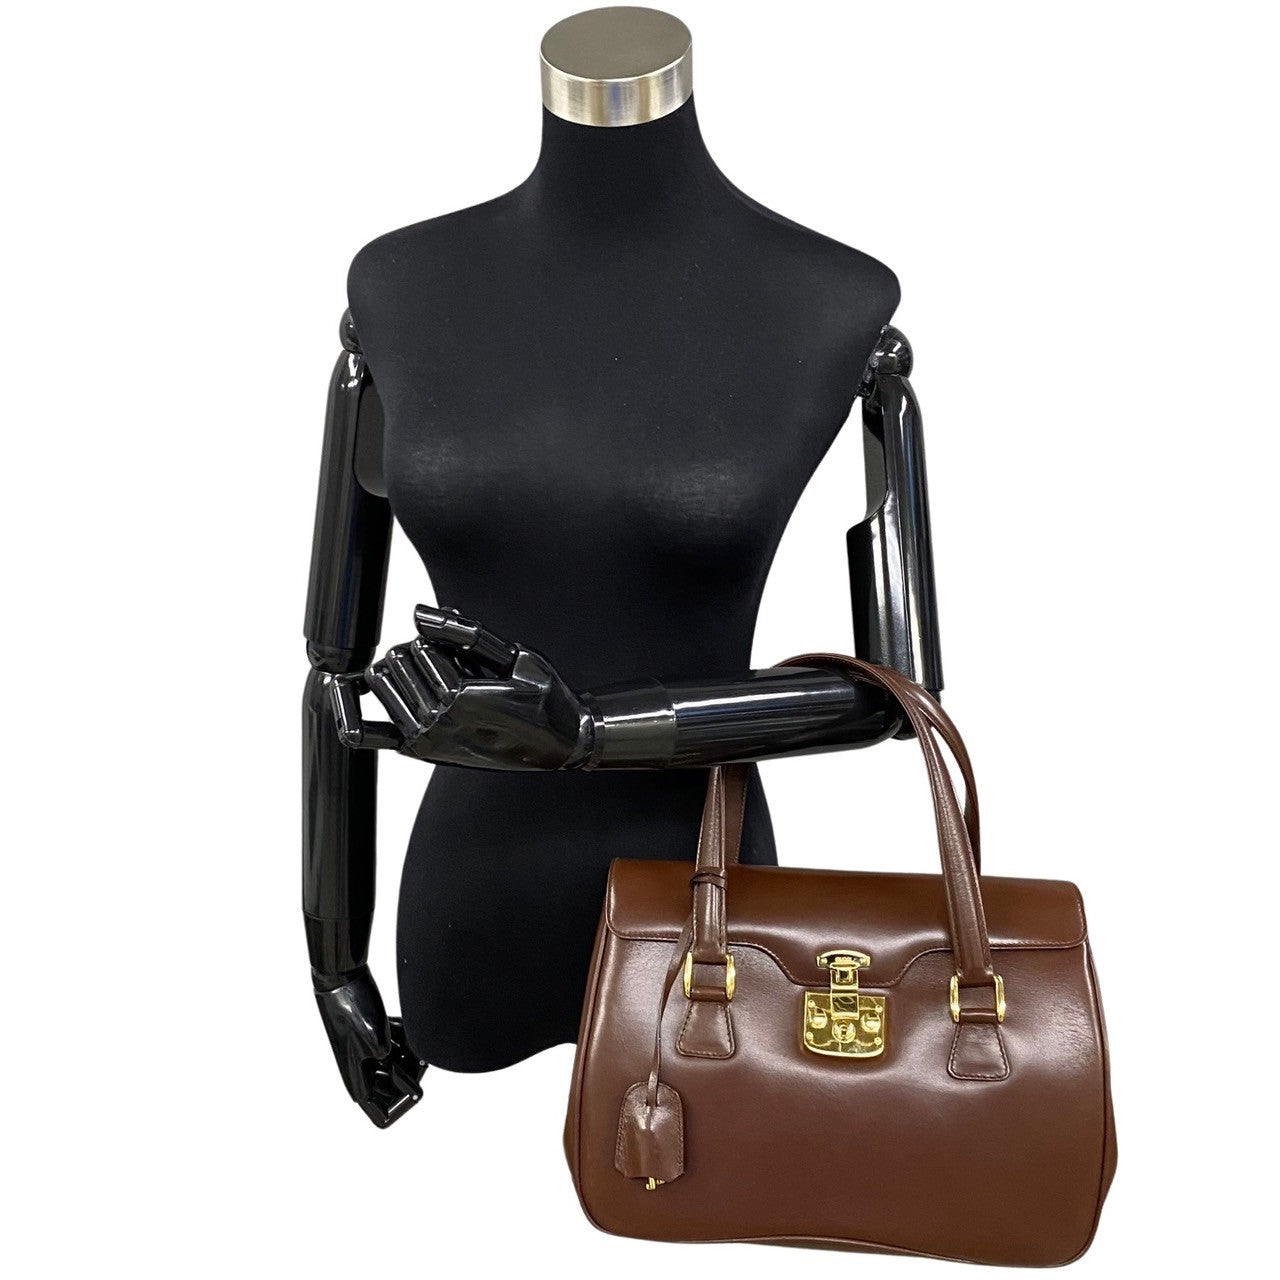 Leather Padlock Handbag